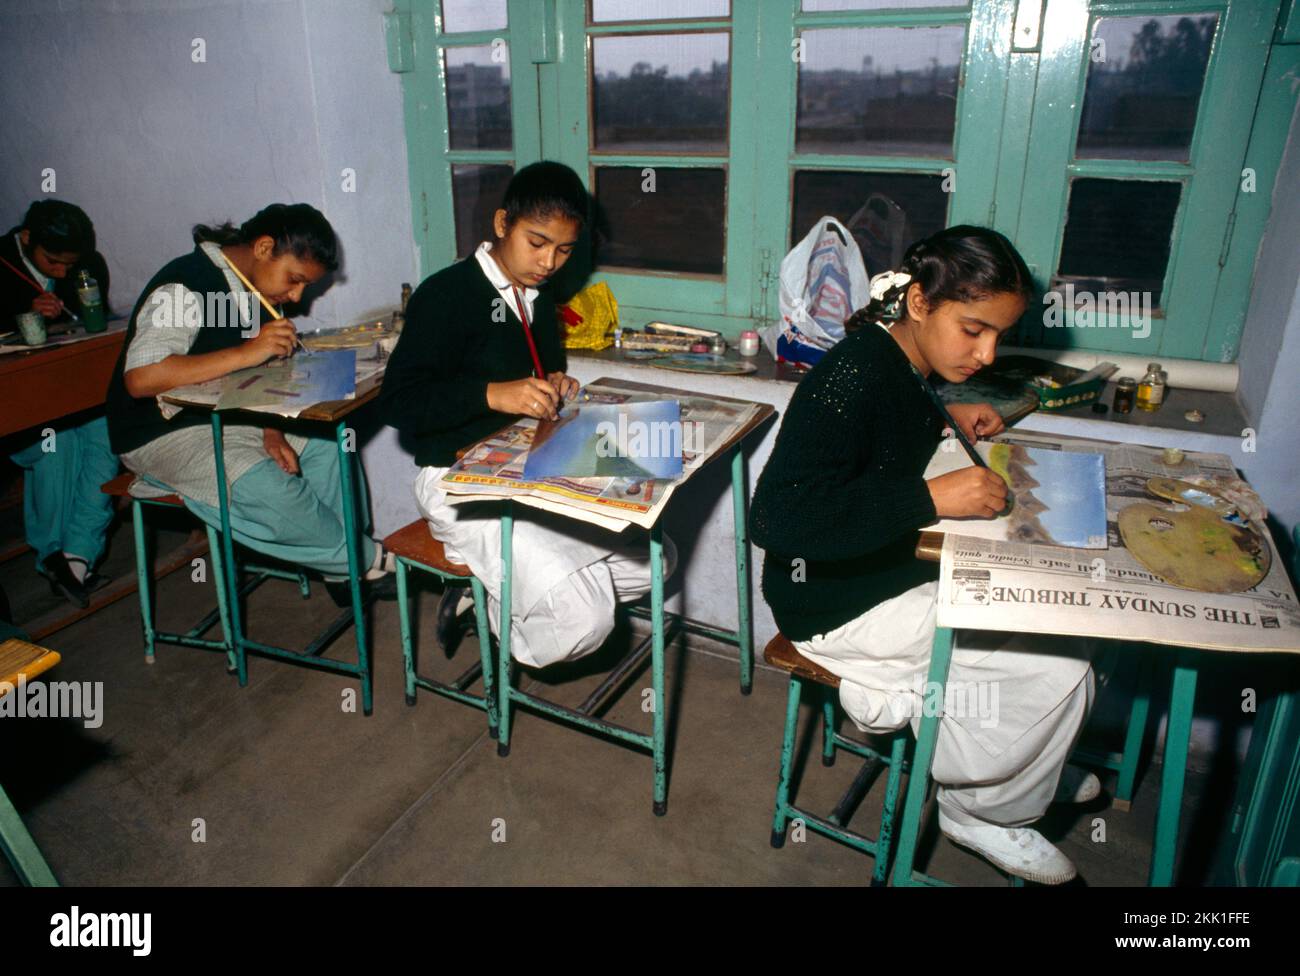 Amritsar India Children at School Painting in Art Class Stock Photo